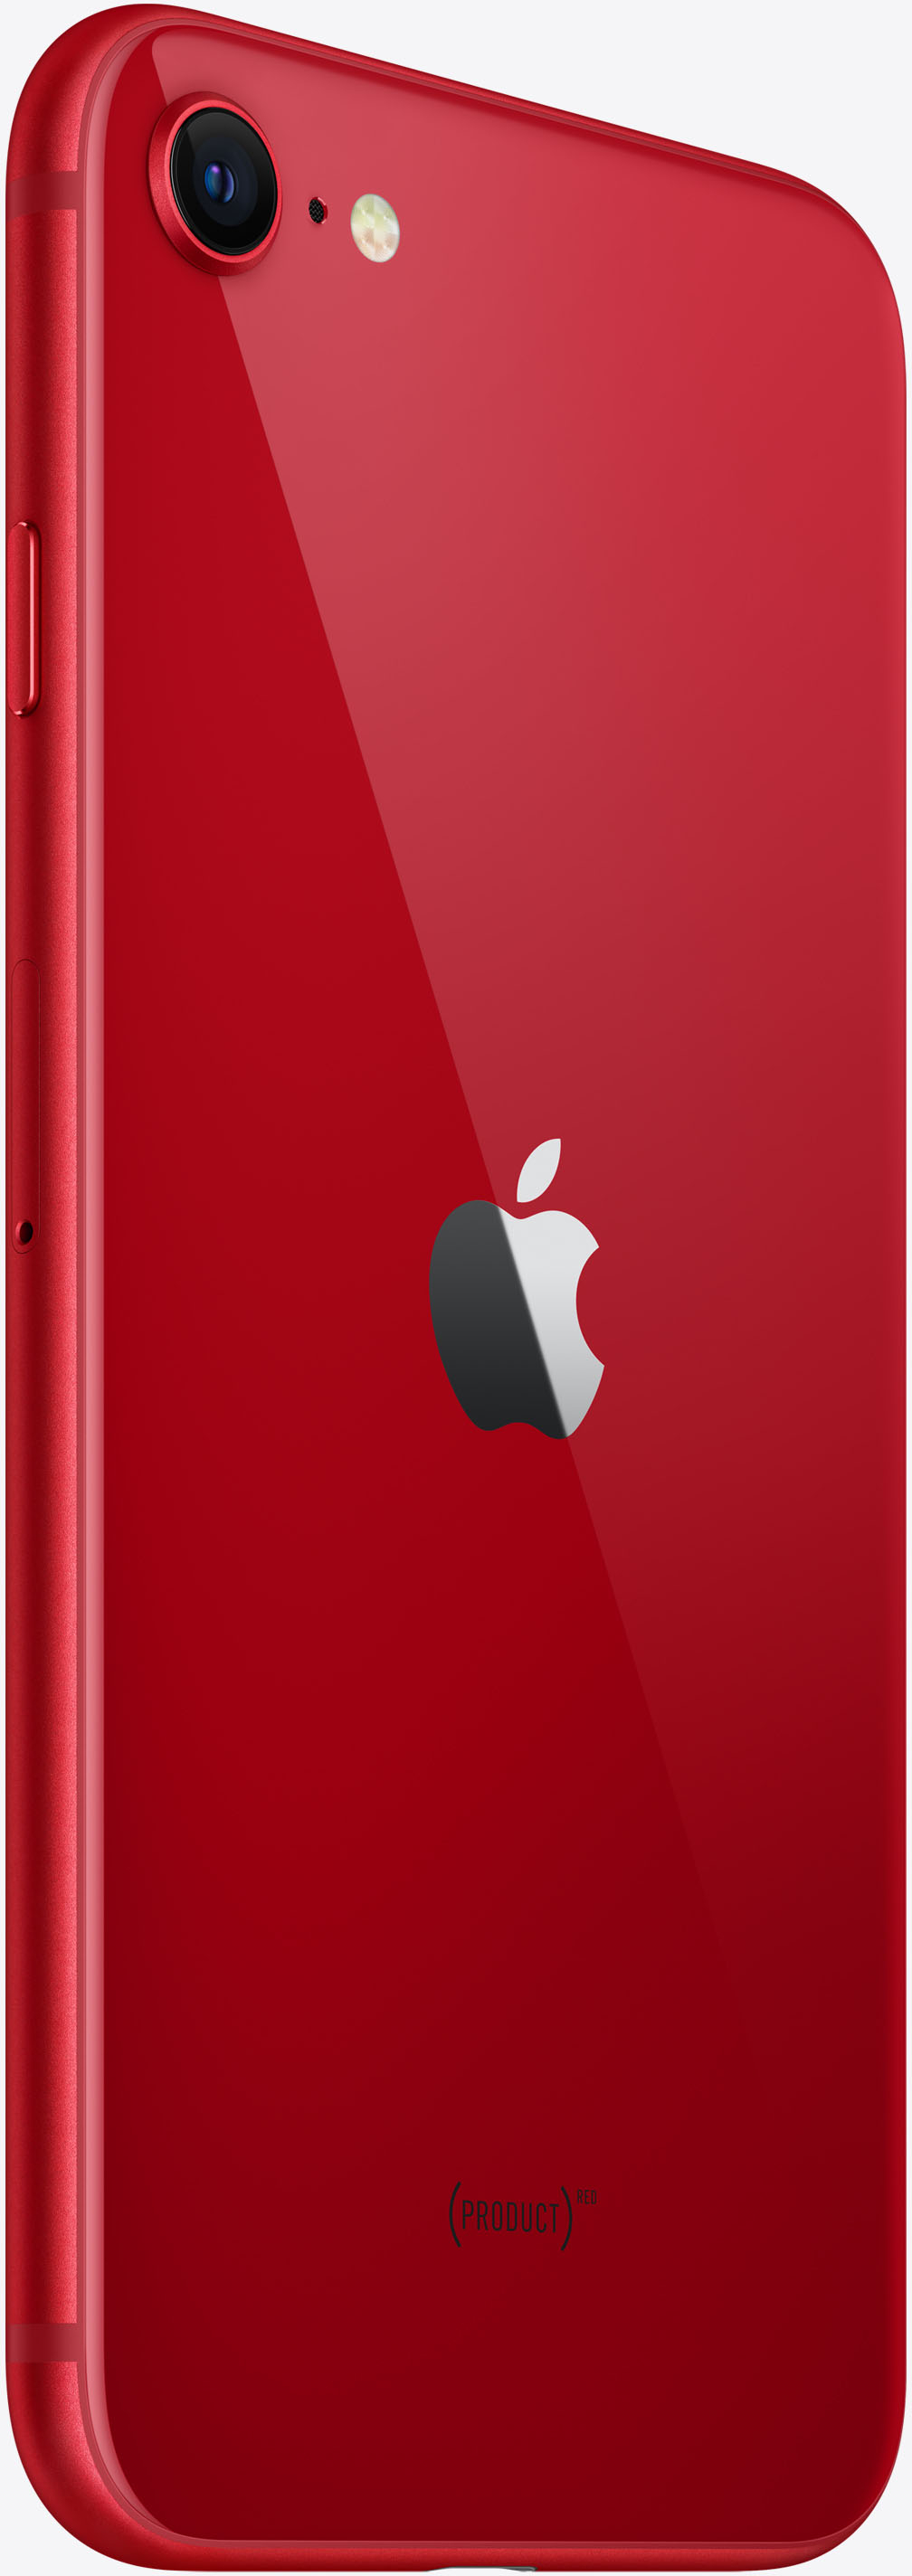 Apple iPhone SE (3rd Generation) 64GB (PRODUCT)RED (Verizon 